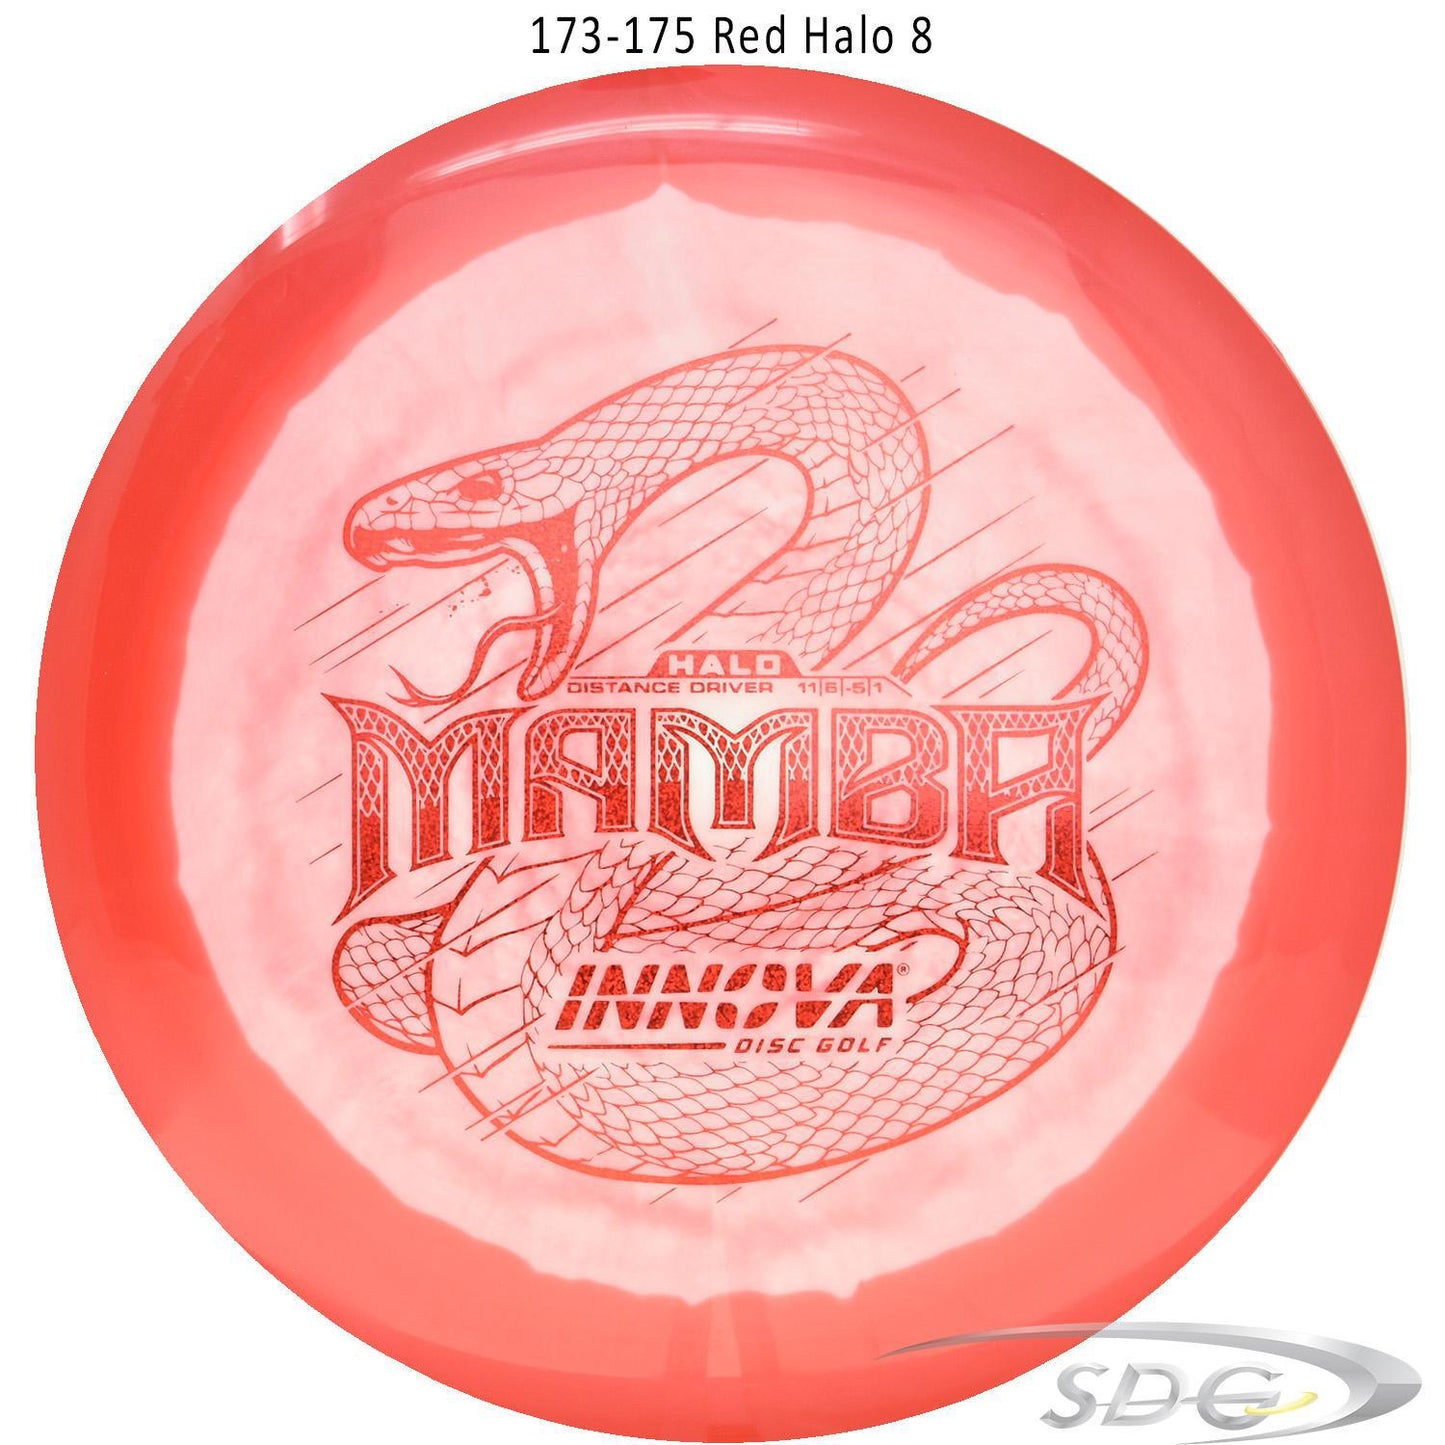 innova-halo-star-mamba-disc-golf-distance-driver 173-175 Red Halo 8 